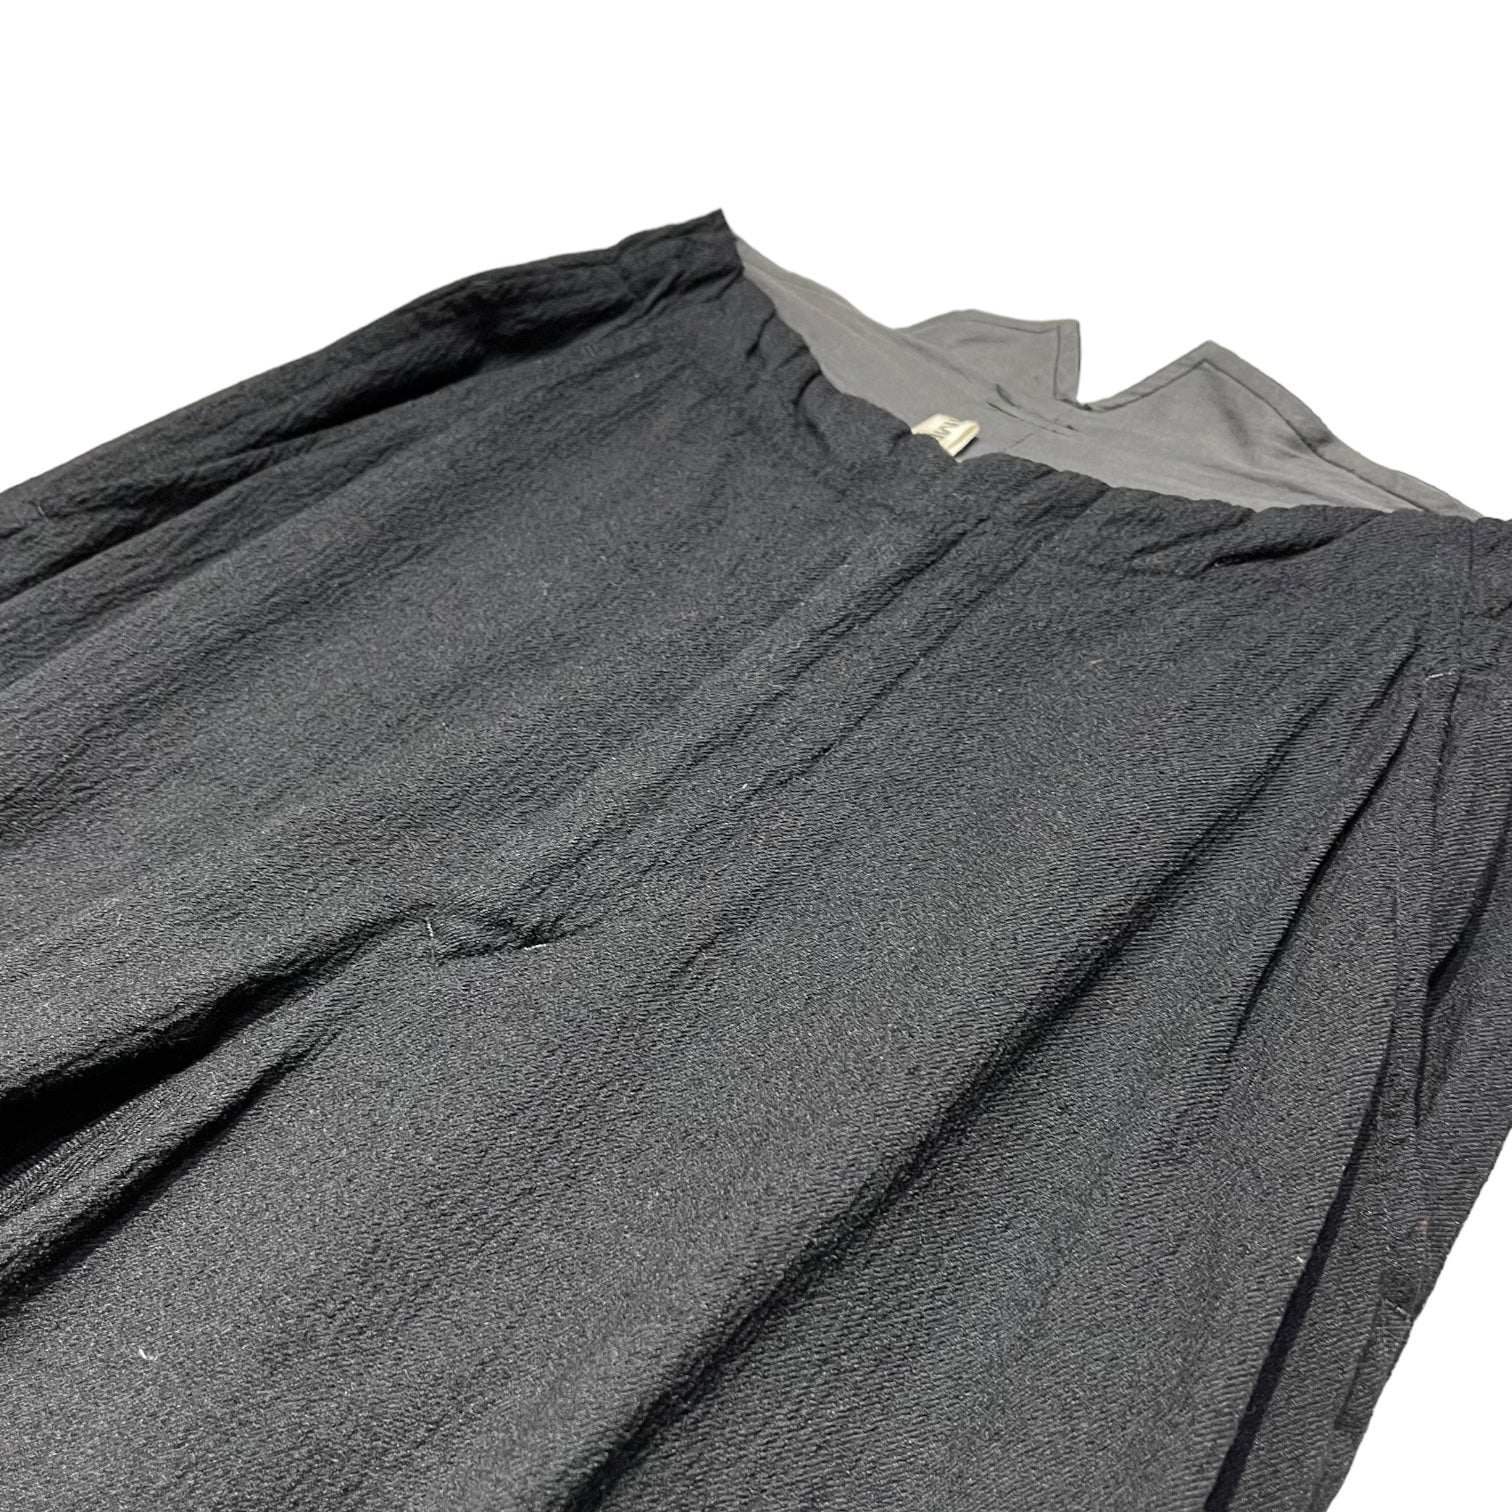 COMME des GARCONS(コムデギャルソン) 80's Wool full cloth jodhpurs pants ウール縮絨 ジョッパーズ パンツ 80年代 GP-05013 M ブラック AD表記無し(1980年代) 稀少アイテム